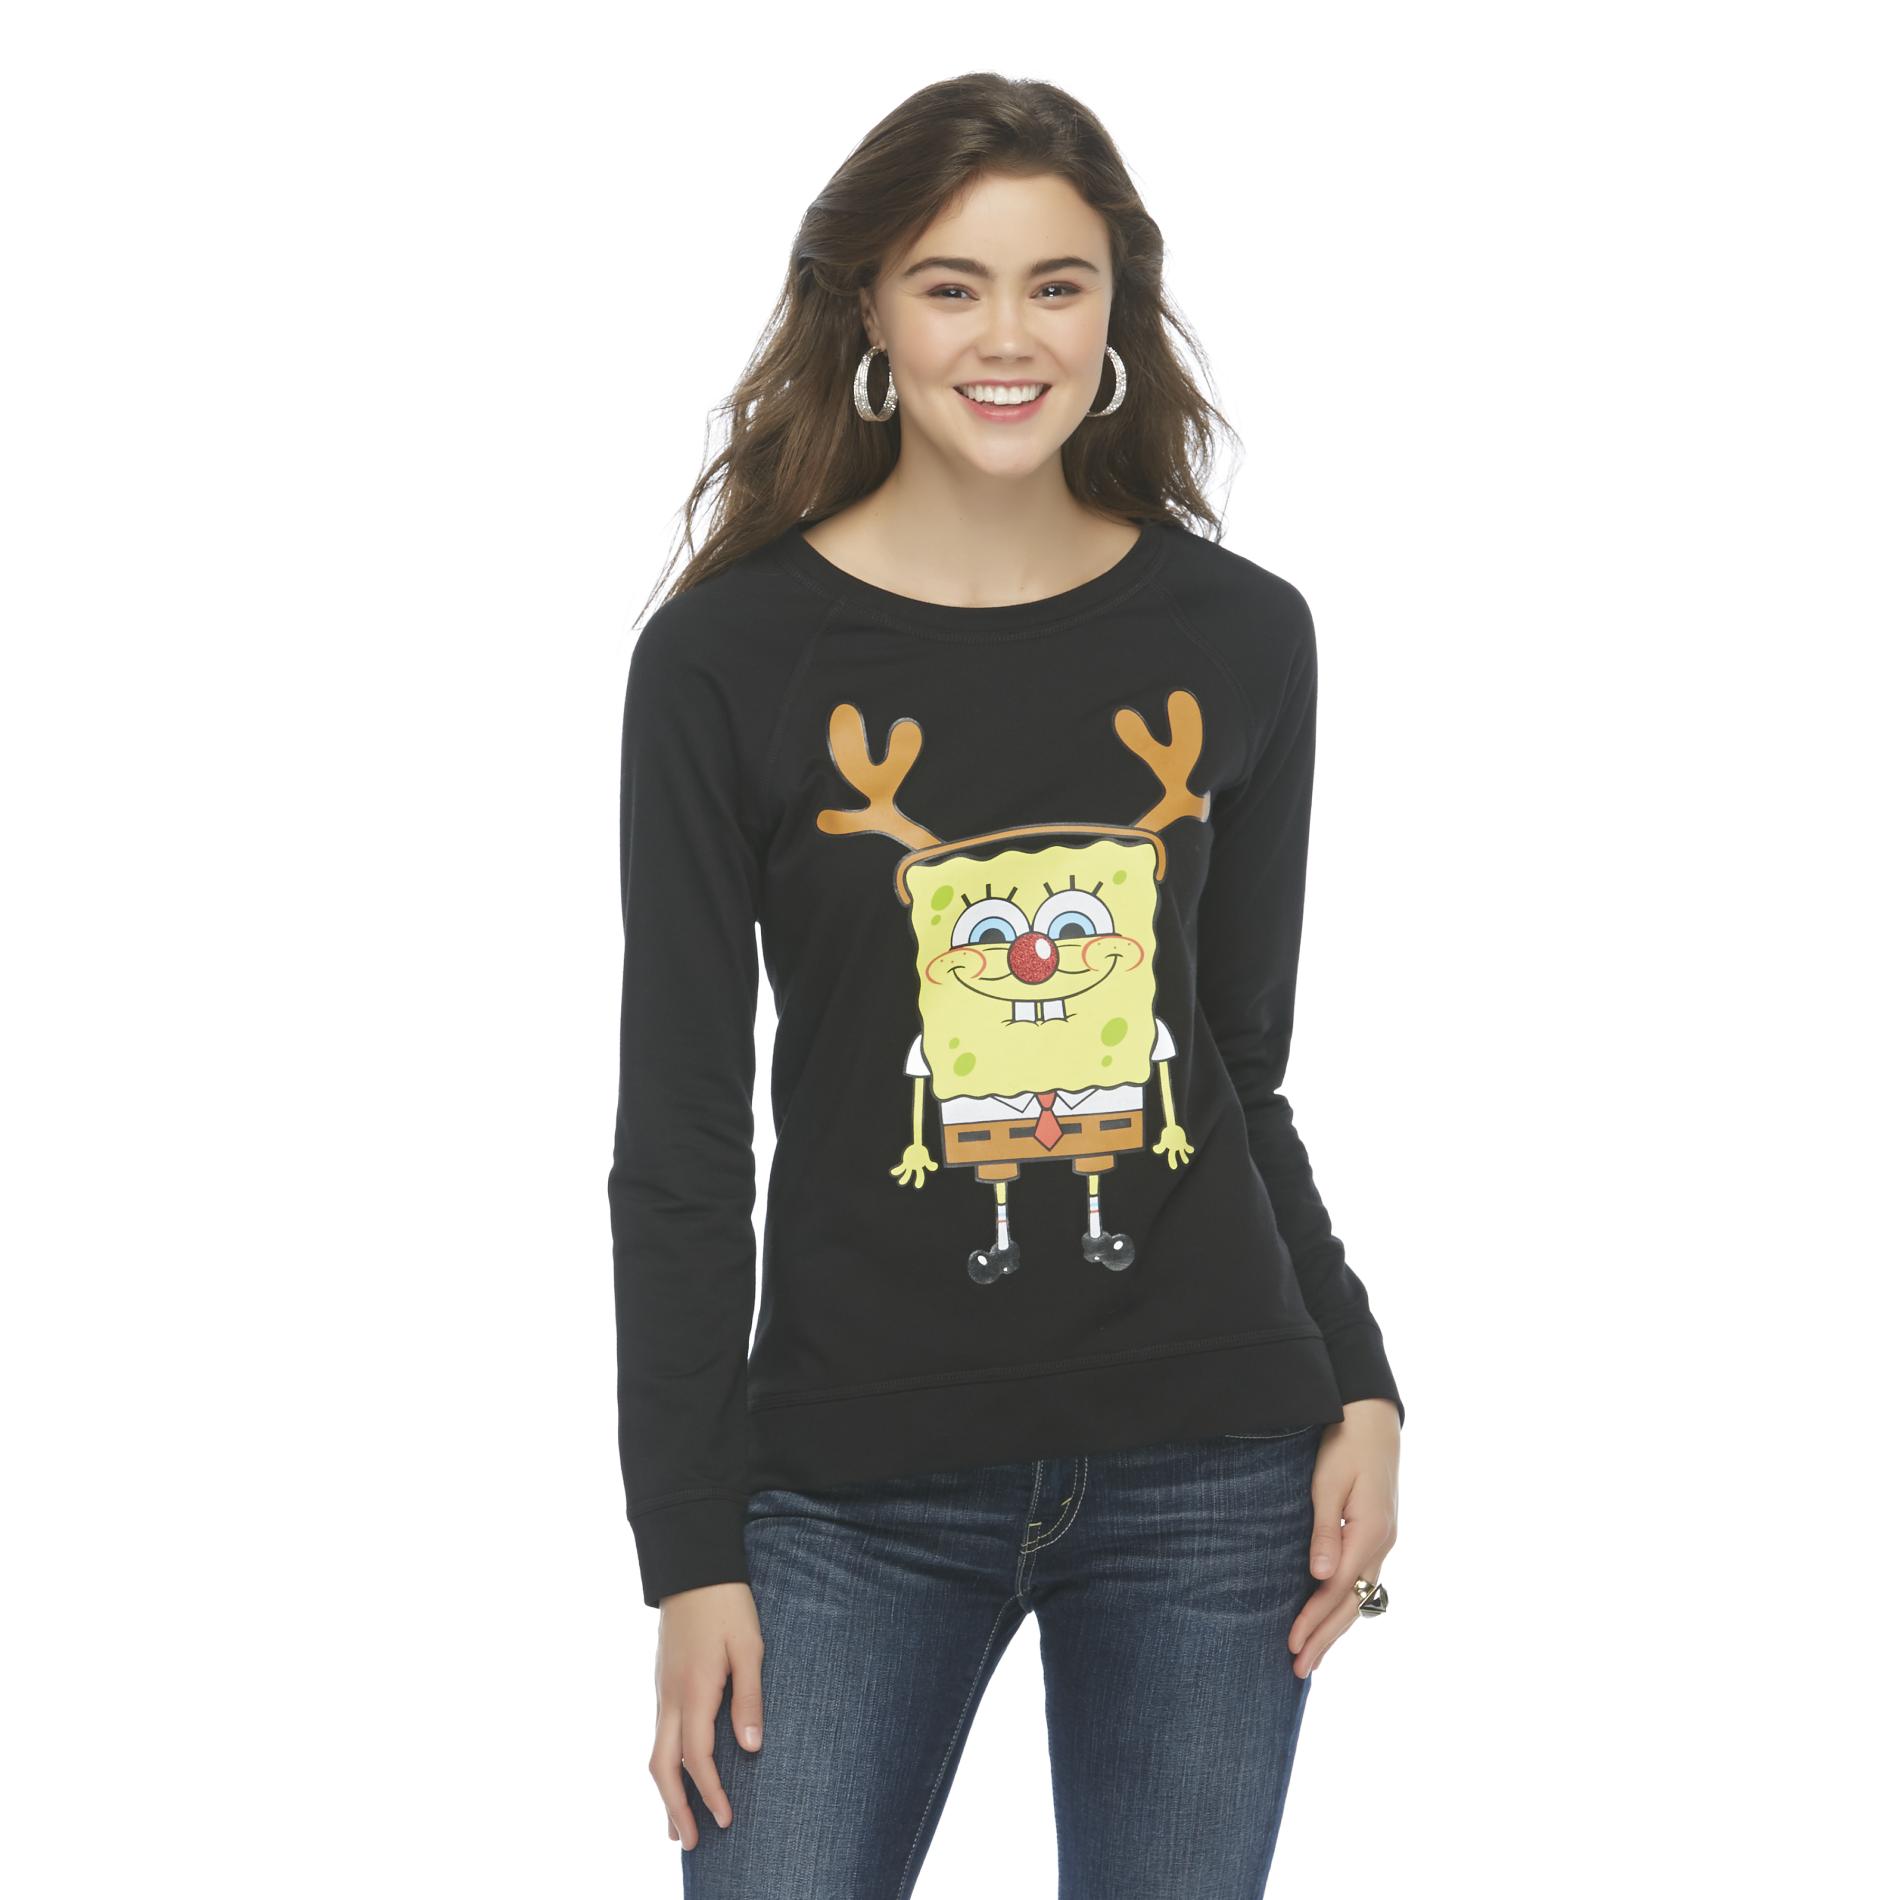 Nickelodeon SpongeBob SquarePants Junior's Christmas Sweatshirt